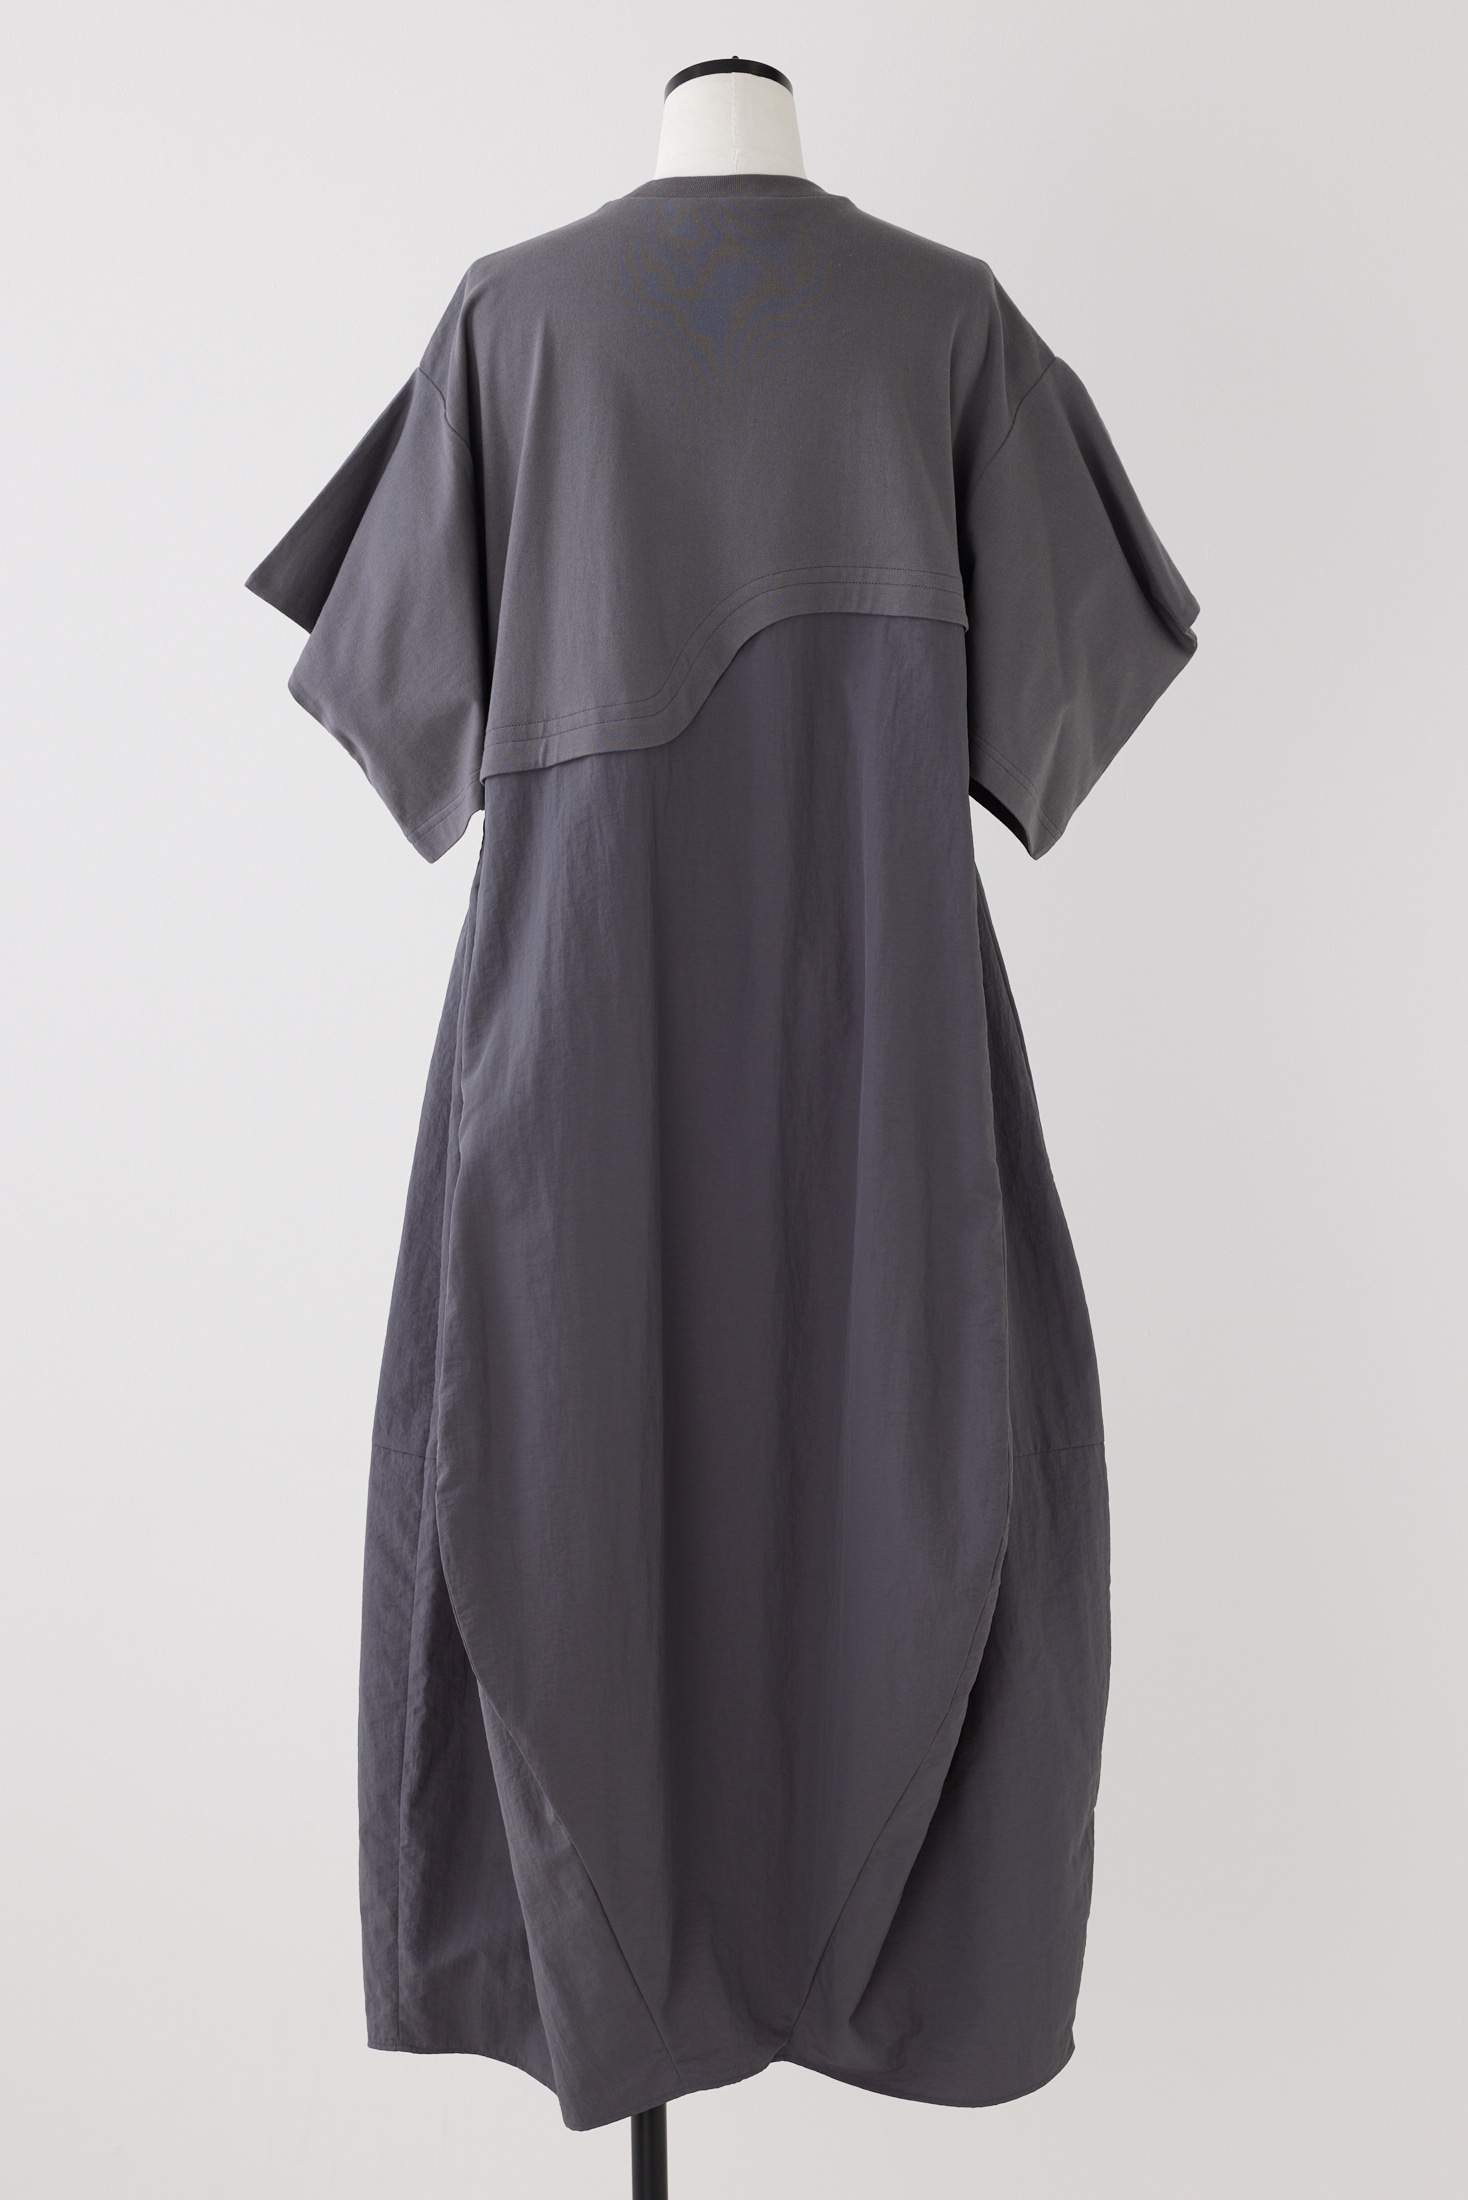 layered-like square-sleeves dress